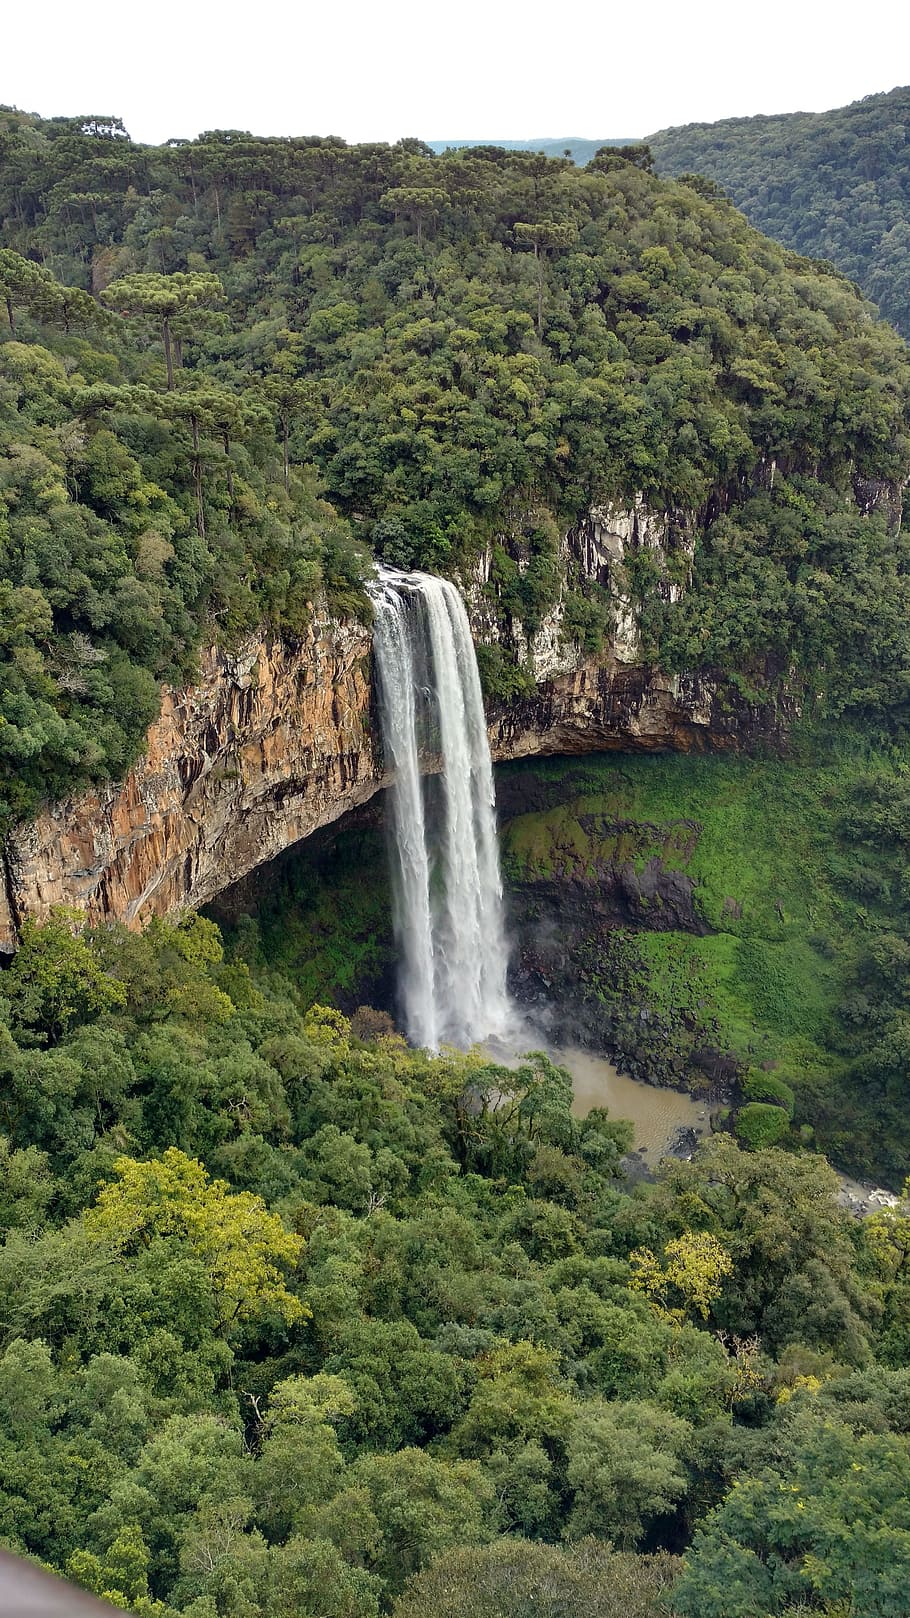 lawn, waterfall, landscape, brazil, nature, cascade, water, plant, tree, scenics - nature